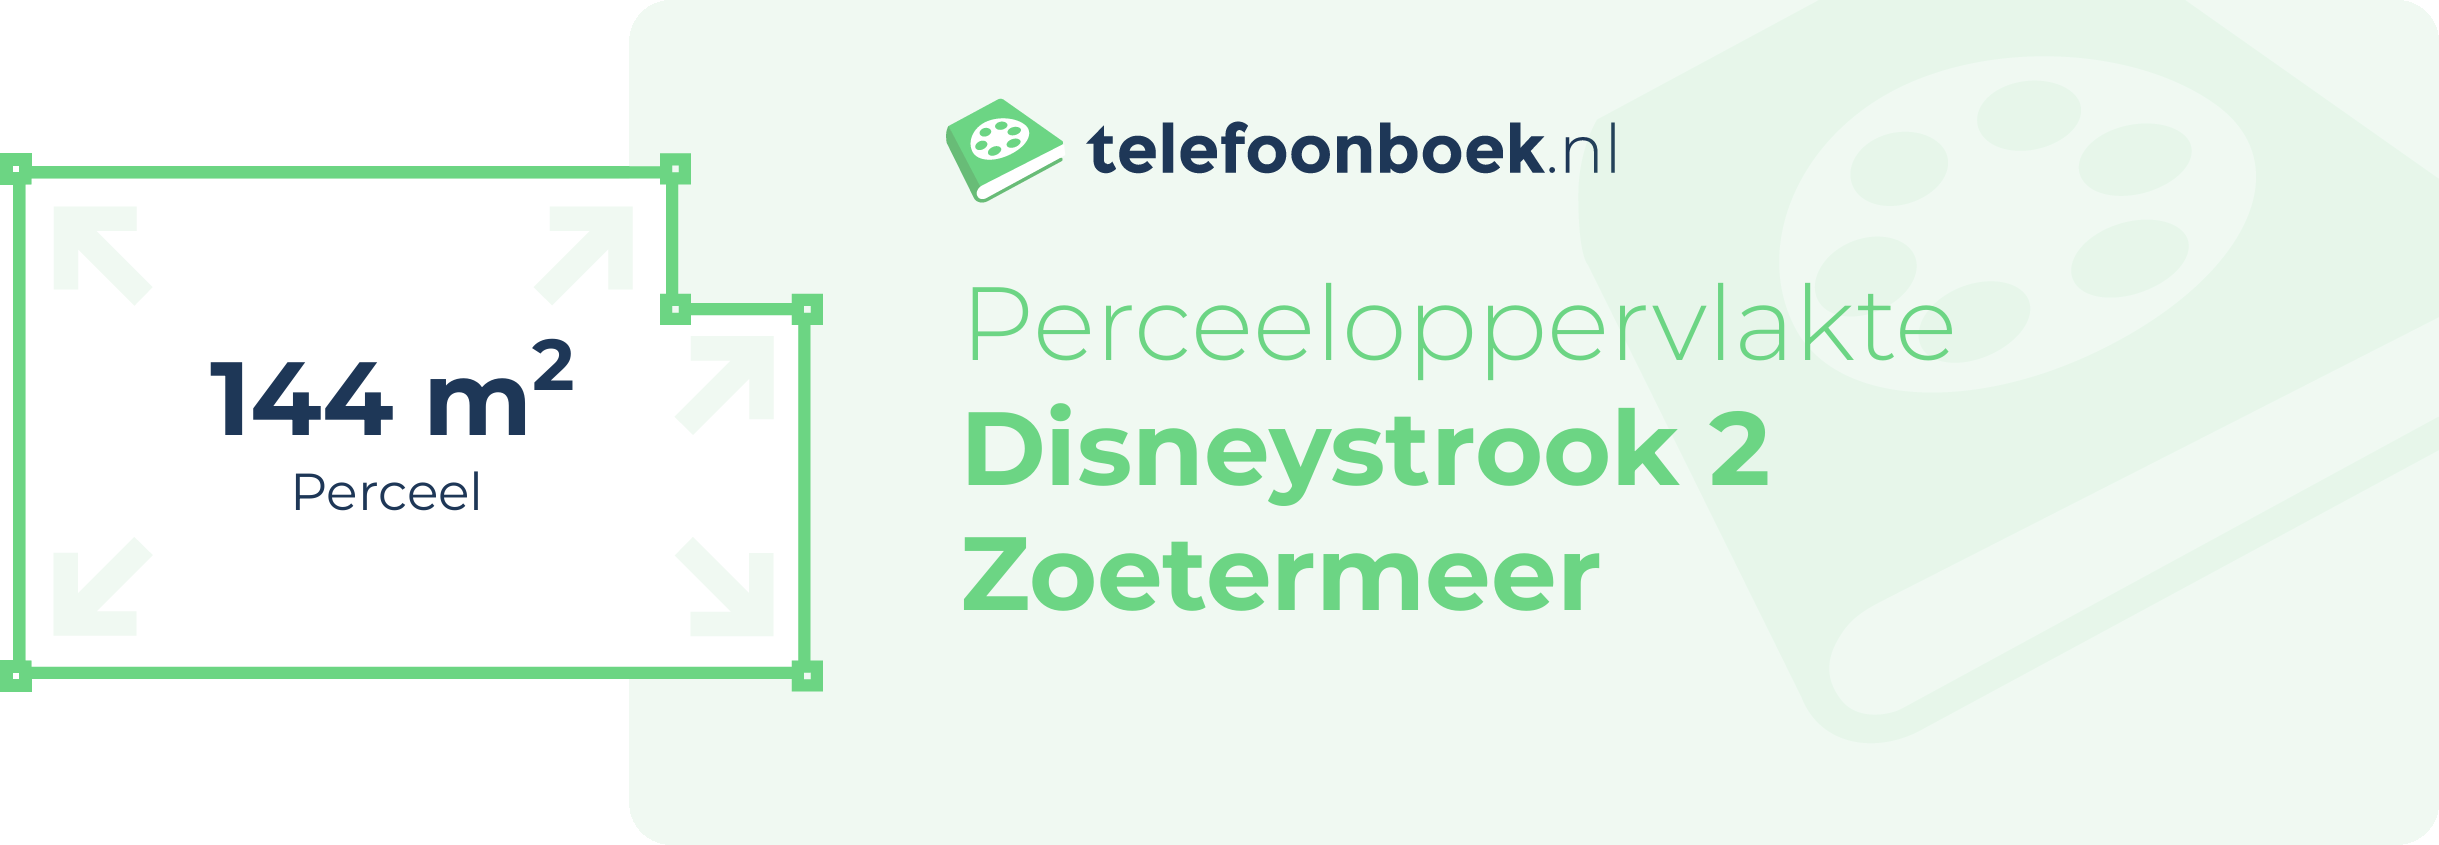 Perceeloppervlakte Disneystrook 2 Zoetermeer